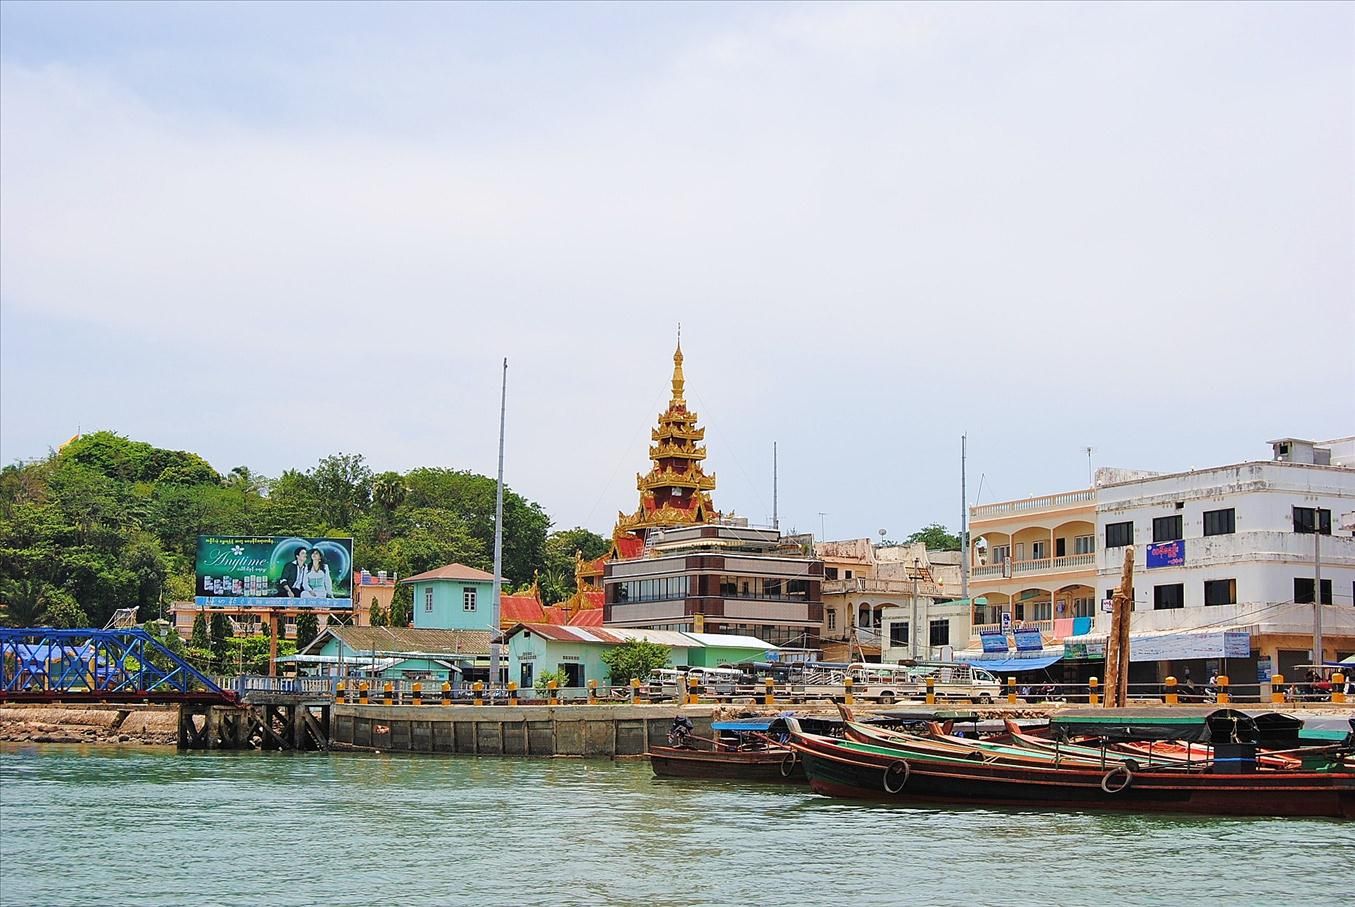 На один день в Бирму, или на лодке из Ранонга в Кавтонг (Бирма) Photobucket